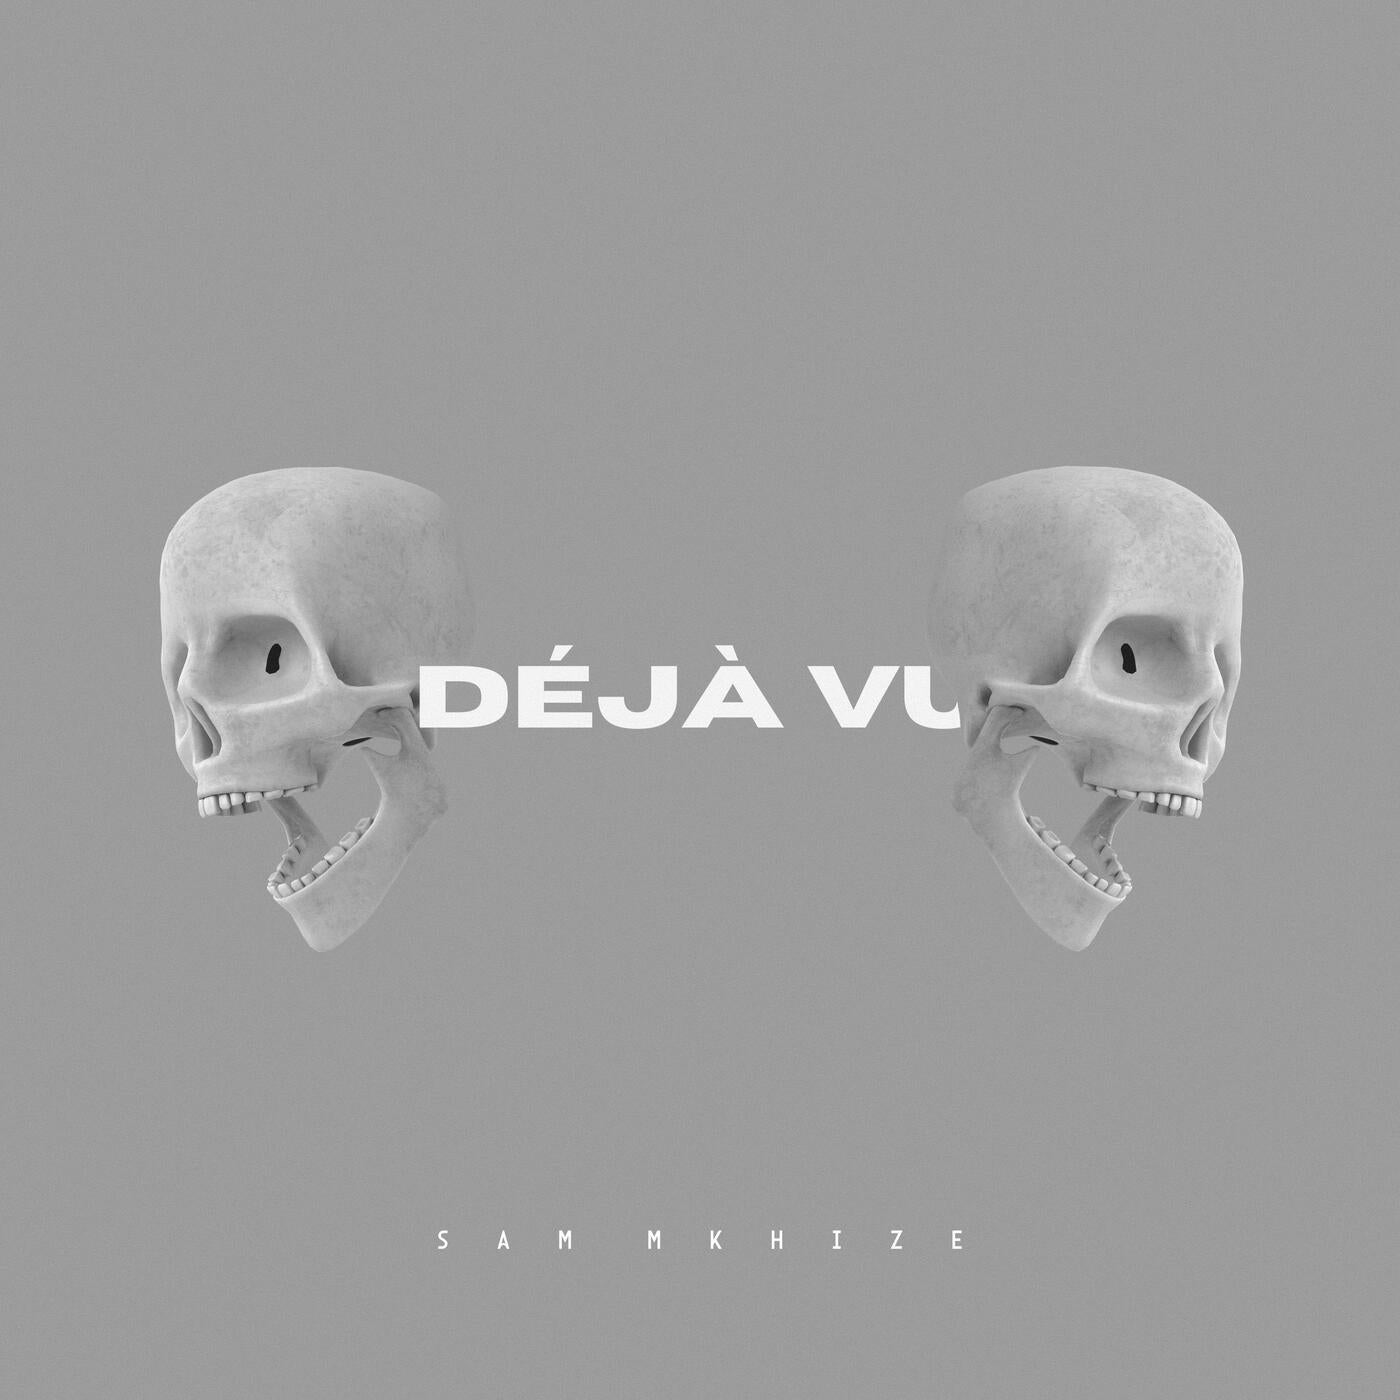 Déjà Vu (Extended Version)